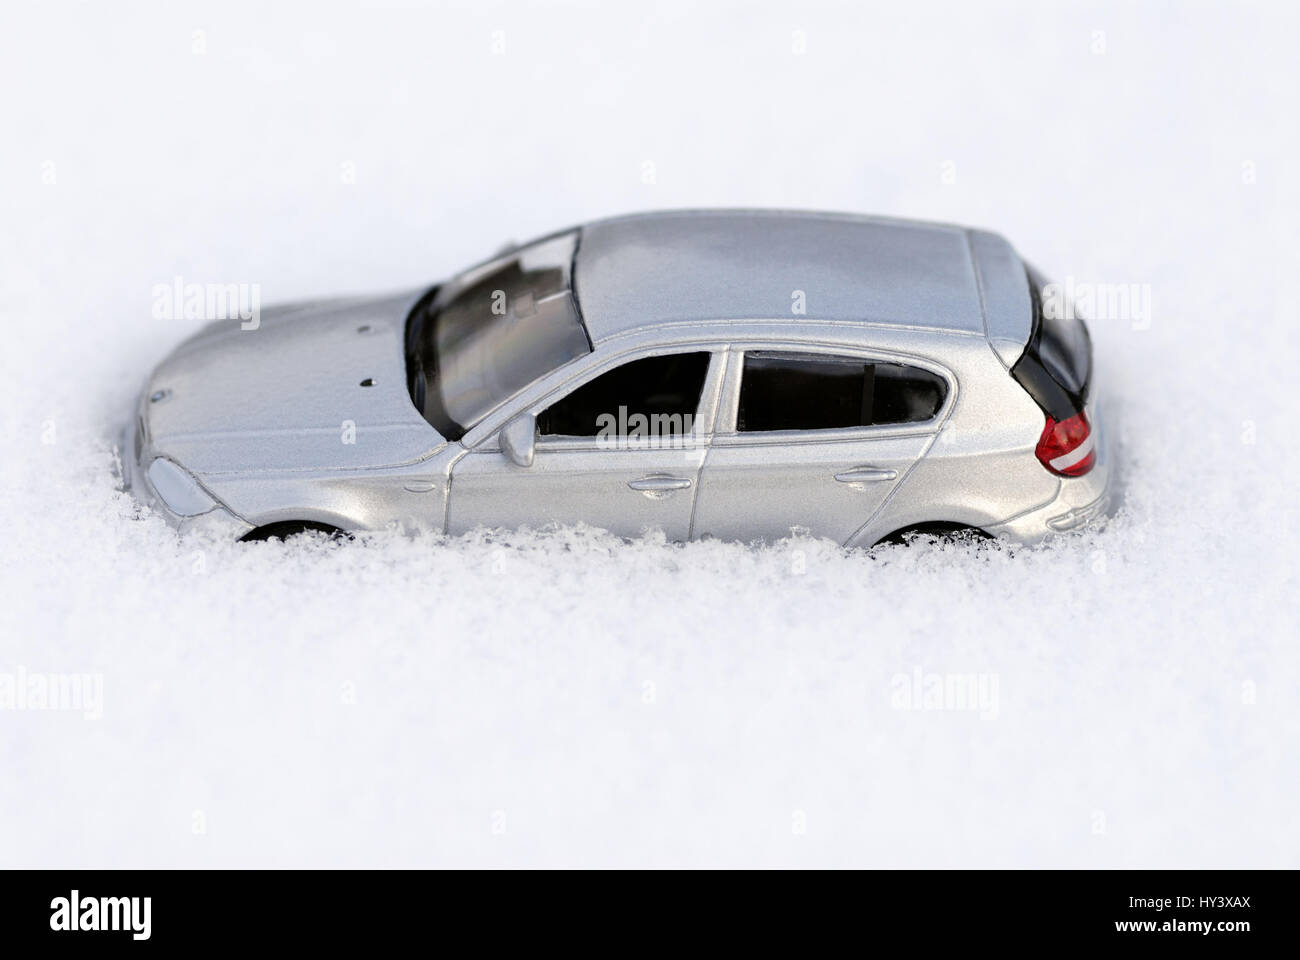 Miniature car in the snow submerged, Miniaturauto im Schnee versunken Stock Photo